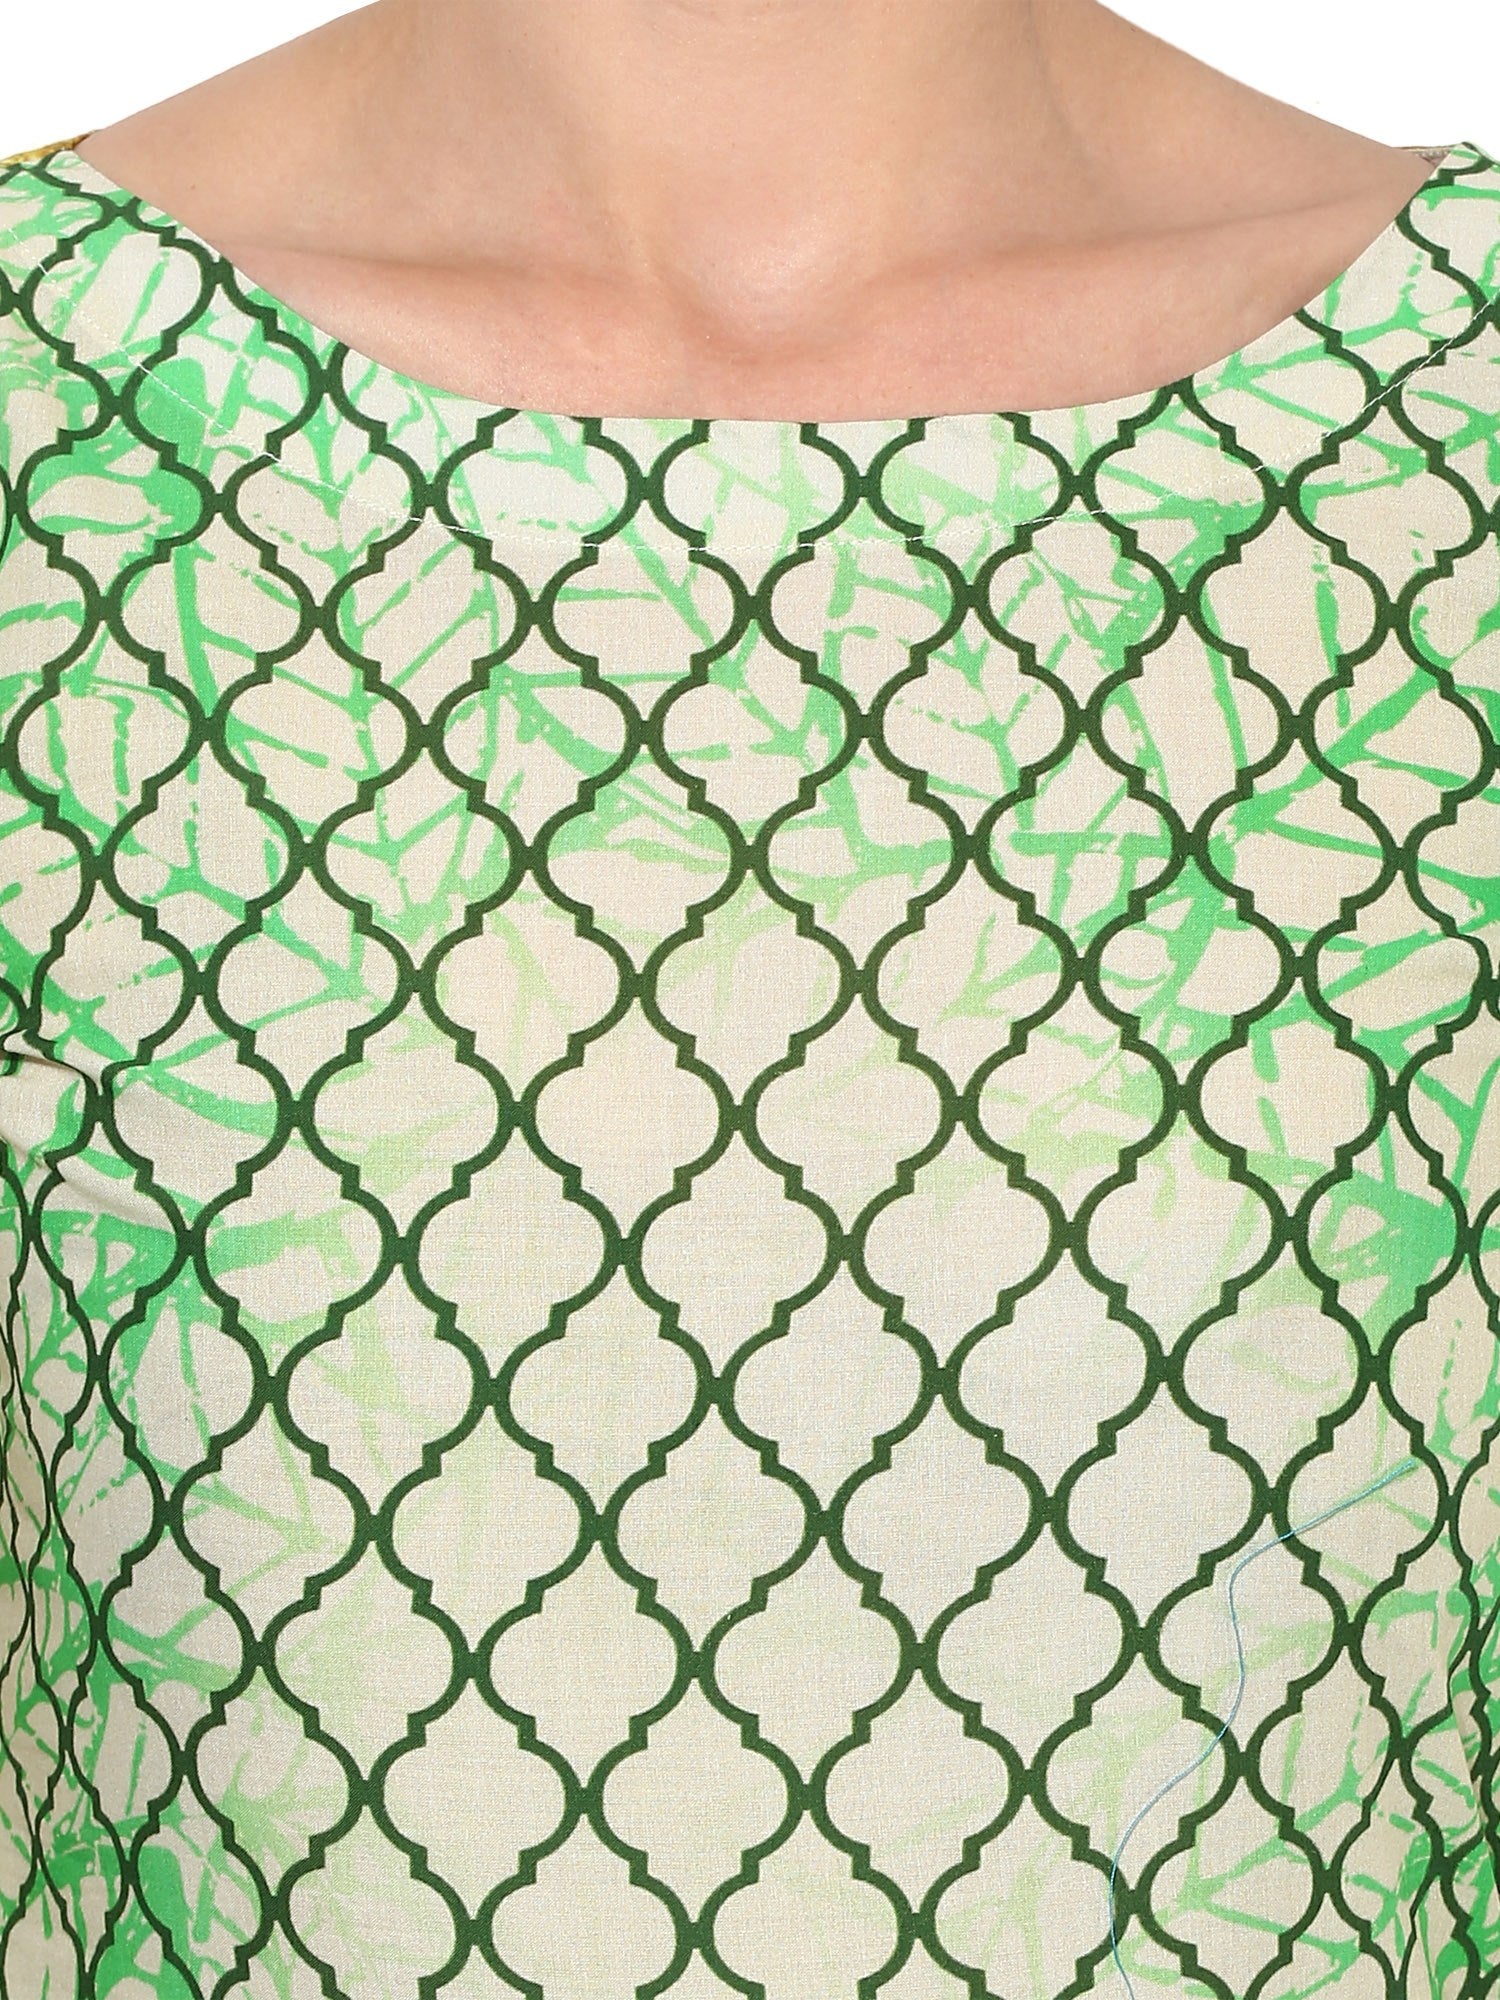 Women's Designer Pista Green Digital Printed Cotton Only Kurti - Ahalyaa